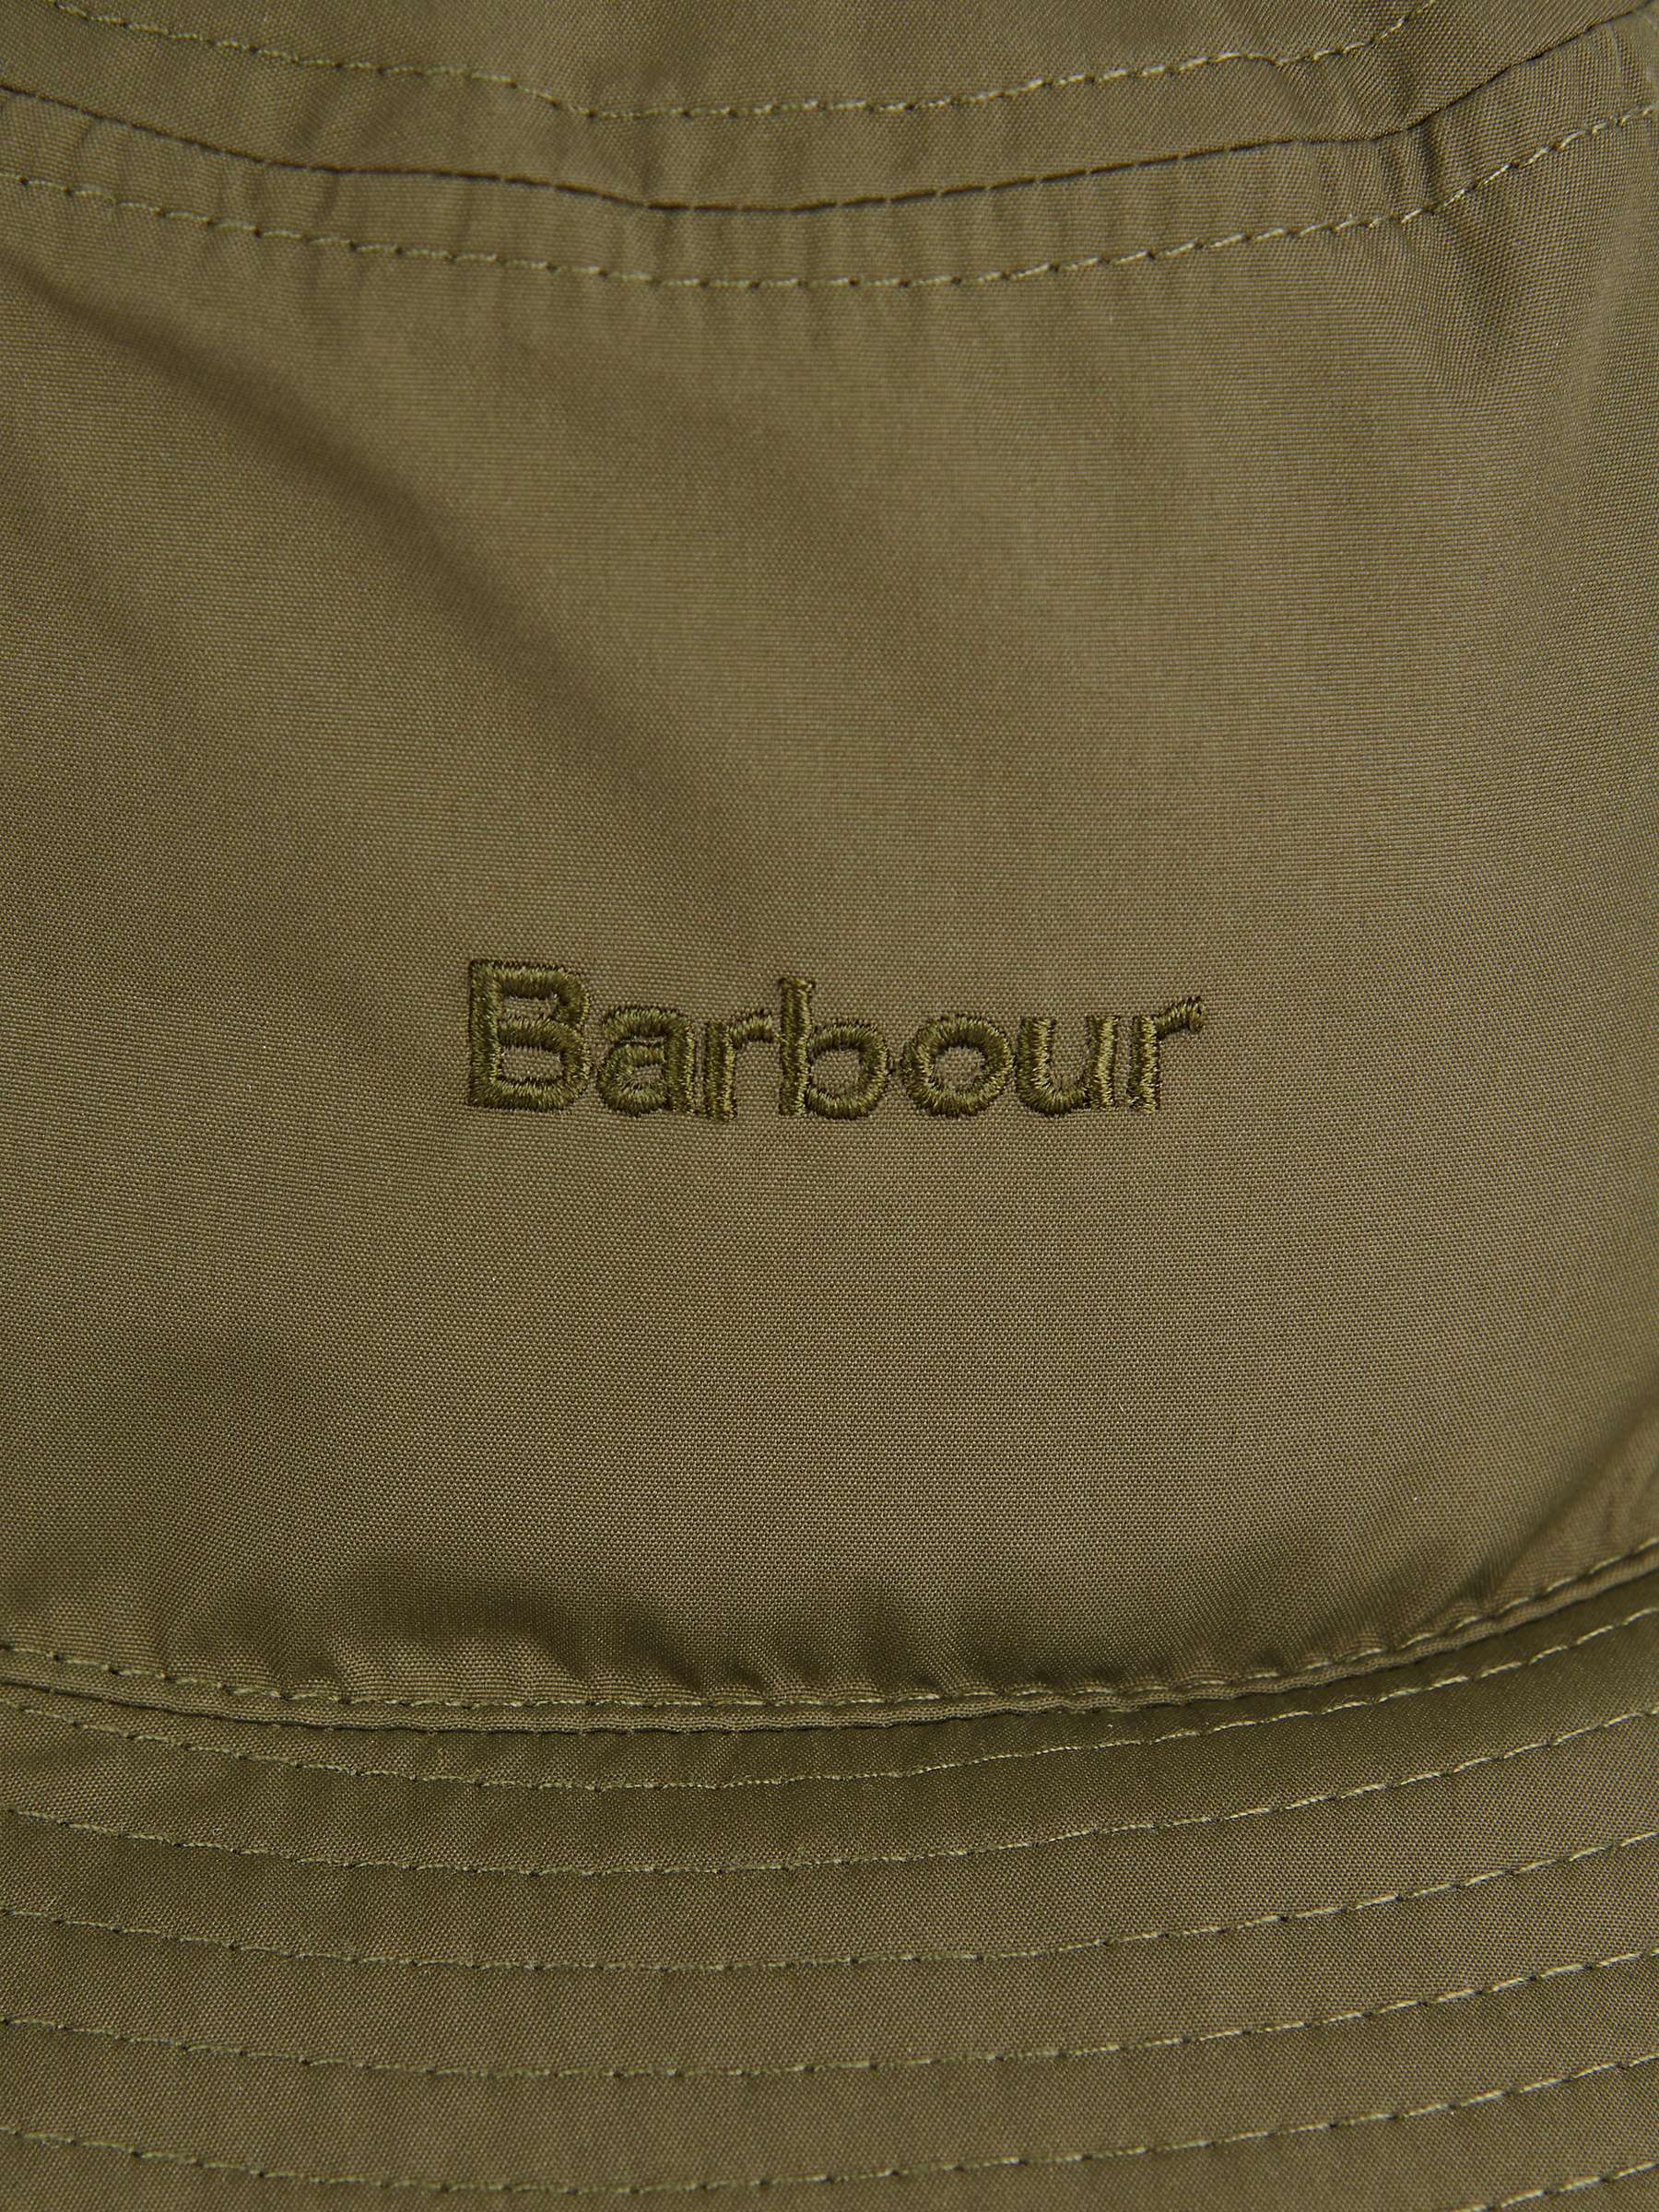 Buy Barbour Clayton Bucket Hat, Fern Online at johnlewis.com